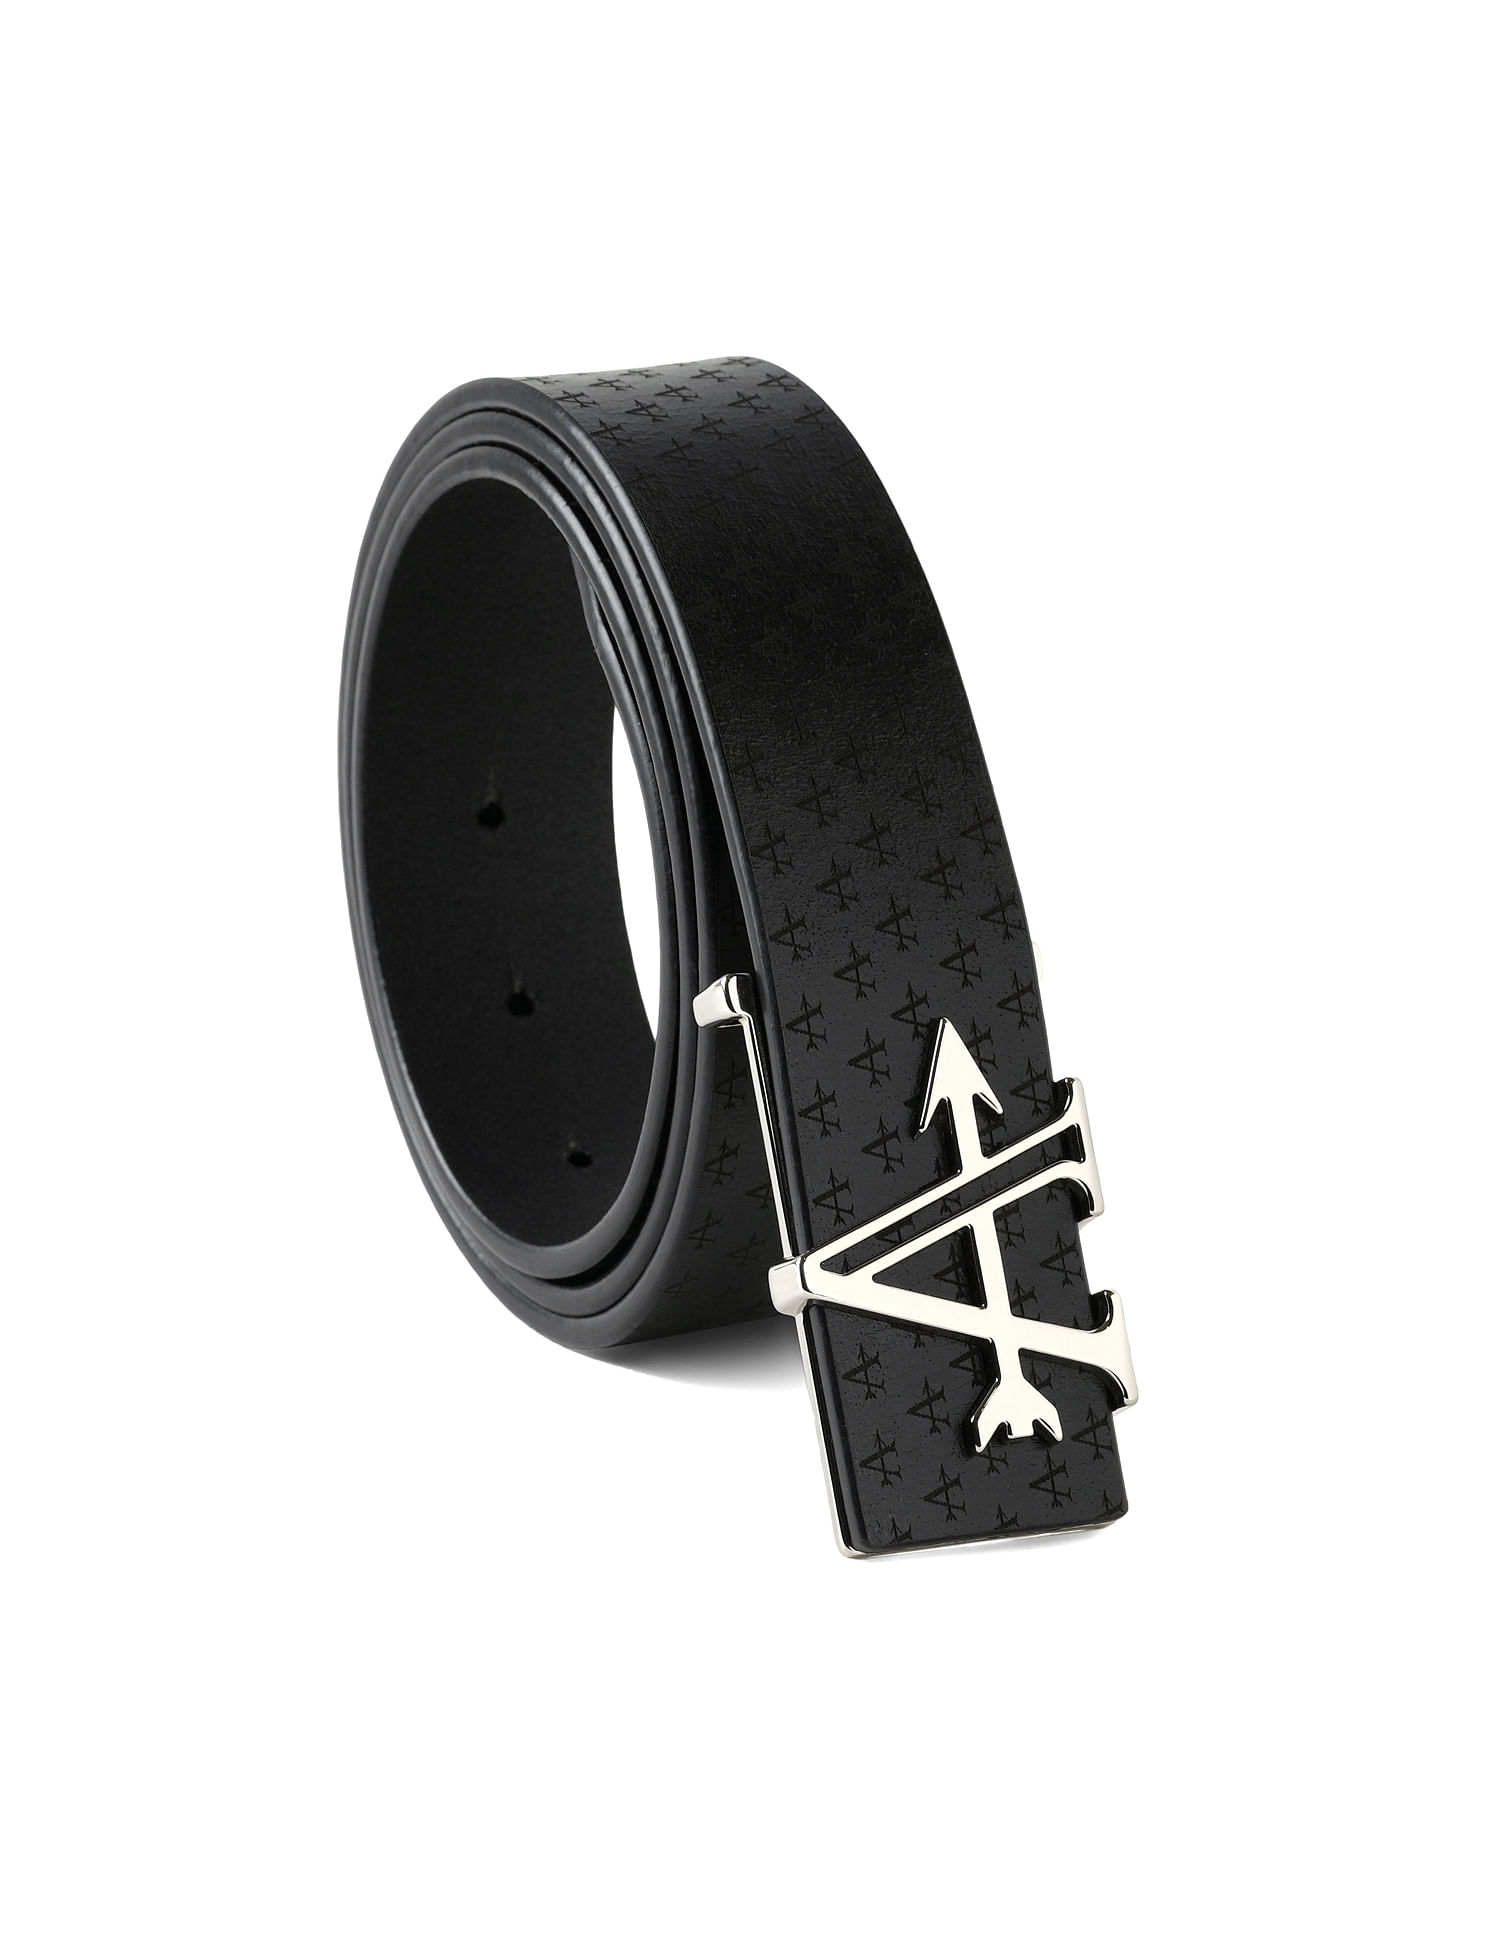 Arrow Printed Leather York Belt, Black (38)